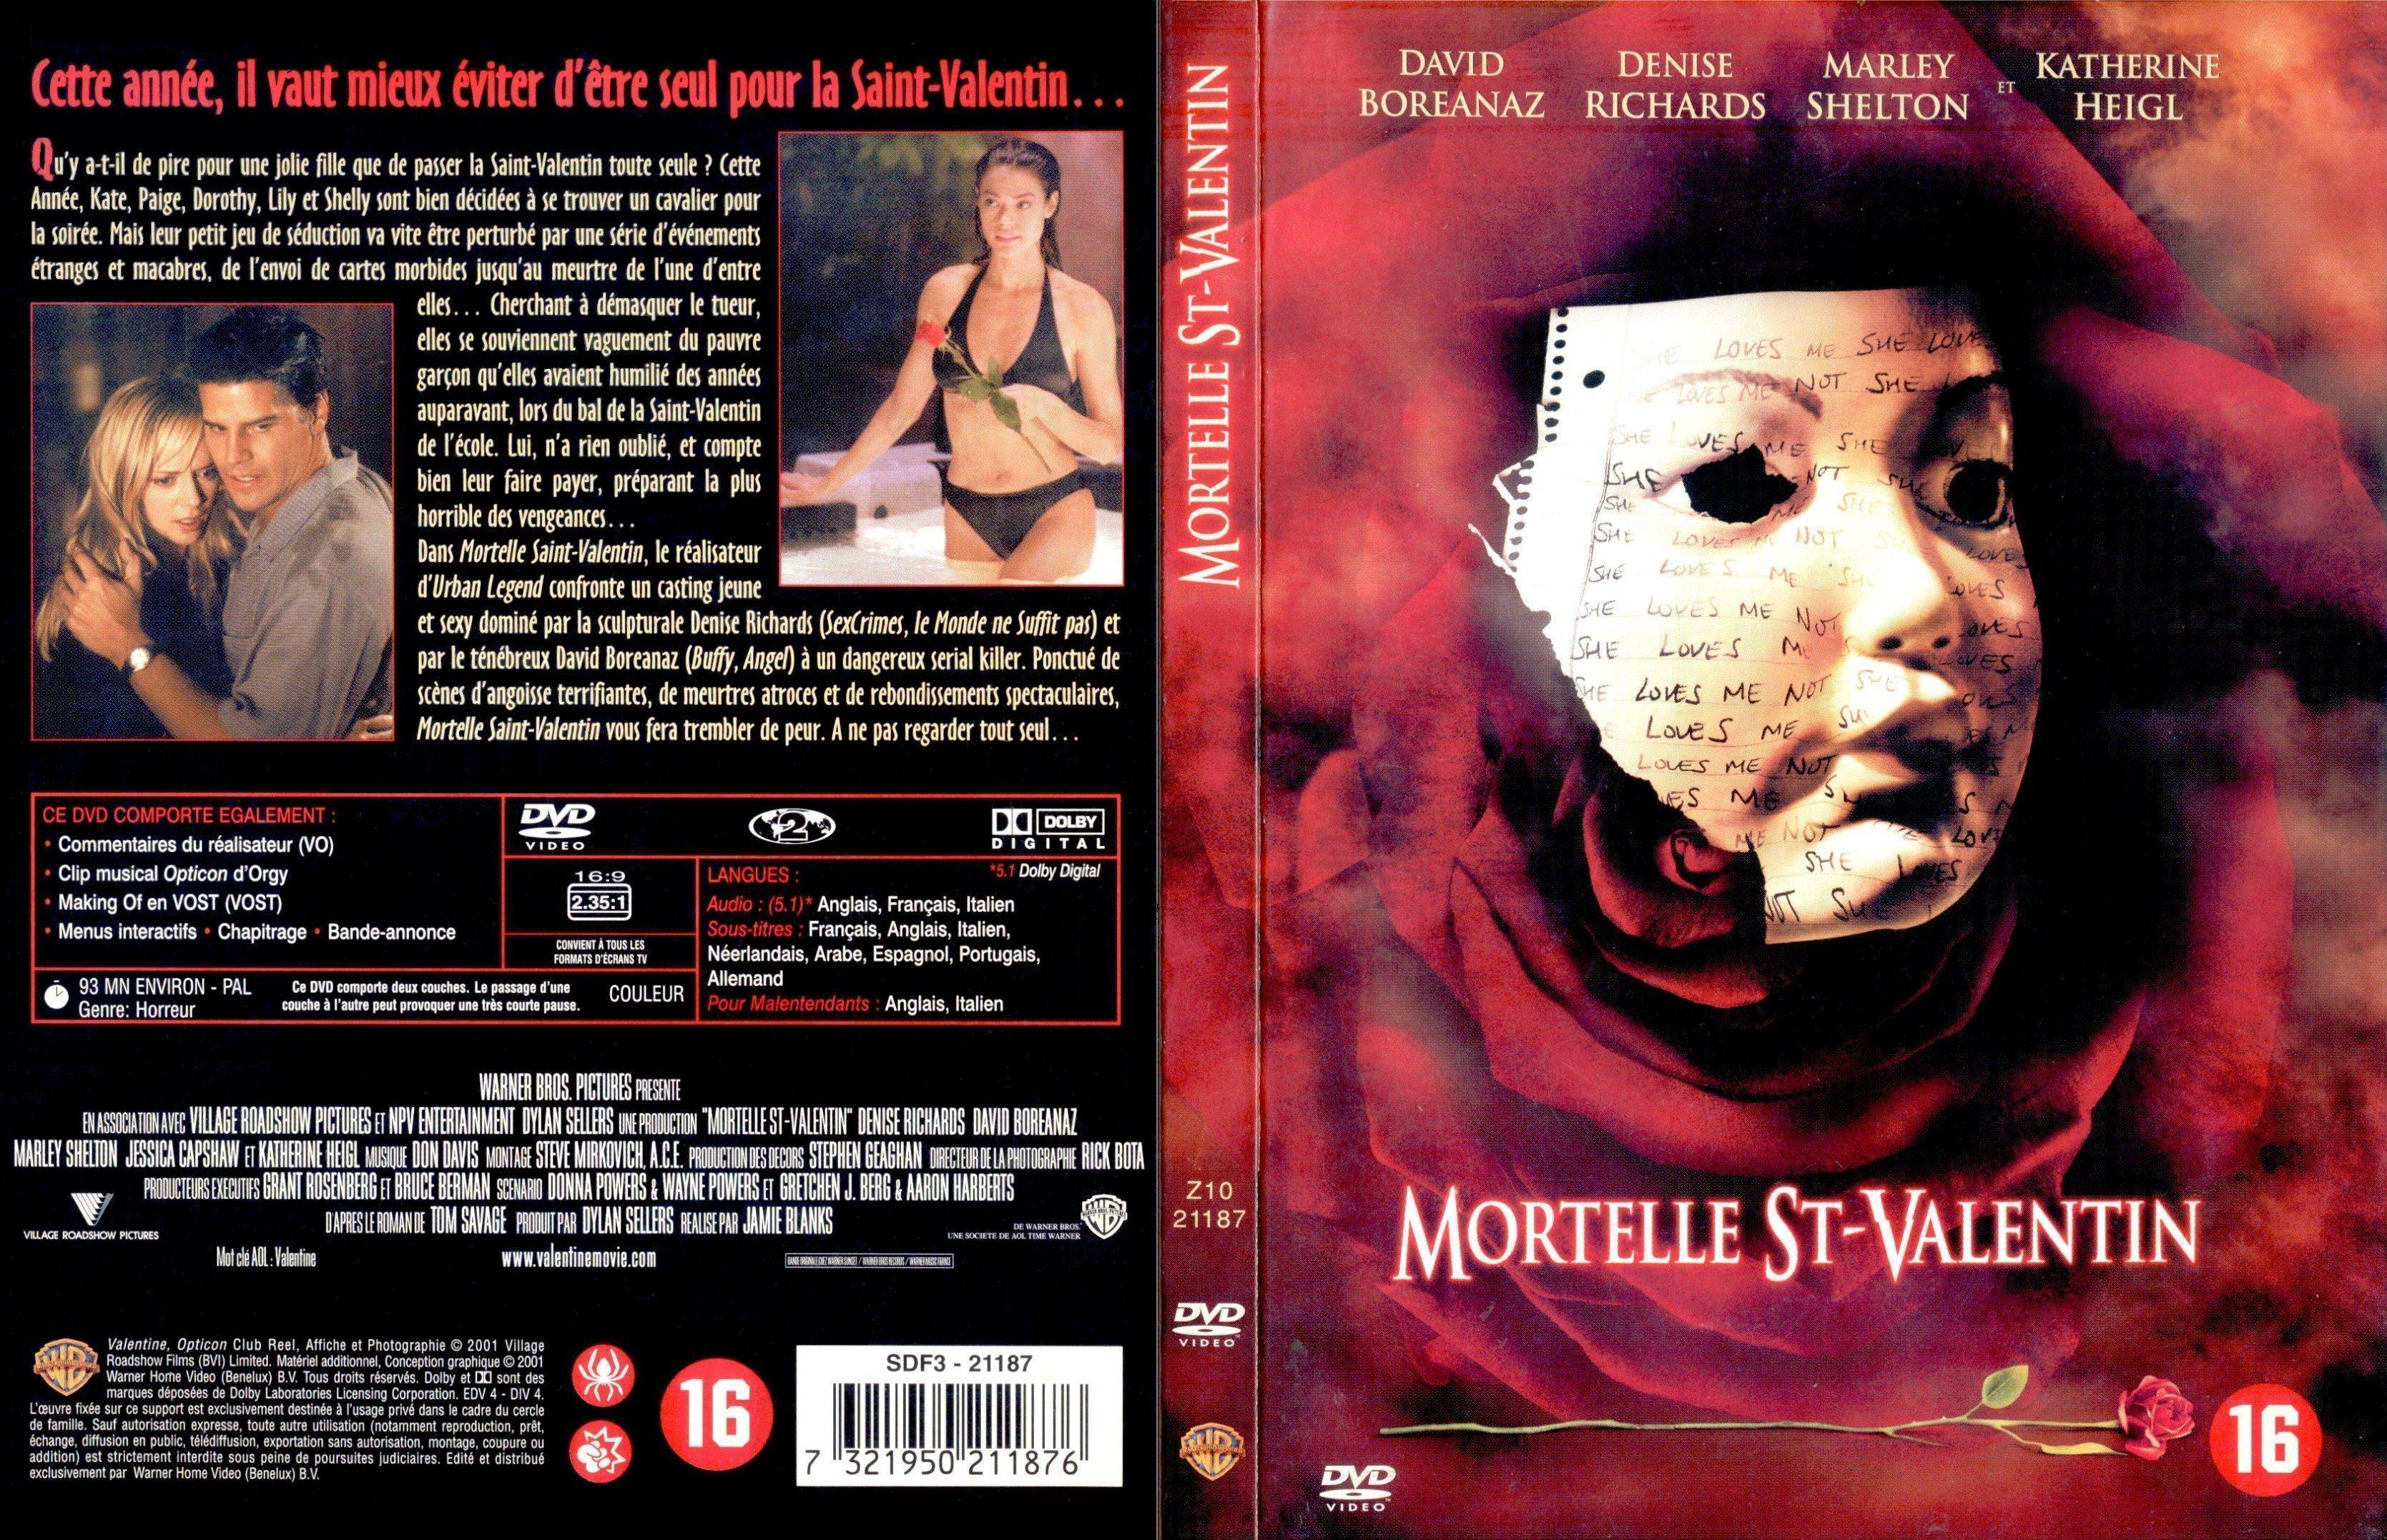 Jaquette DVD Mortelle Saint Valentin v2